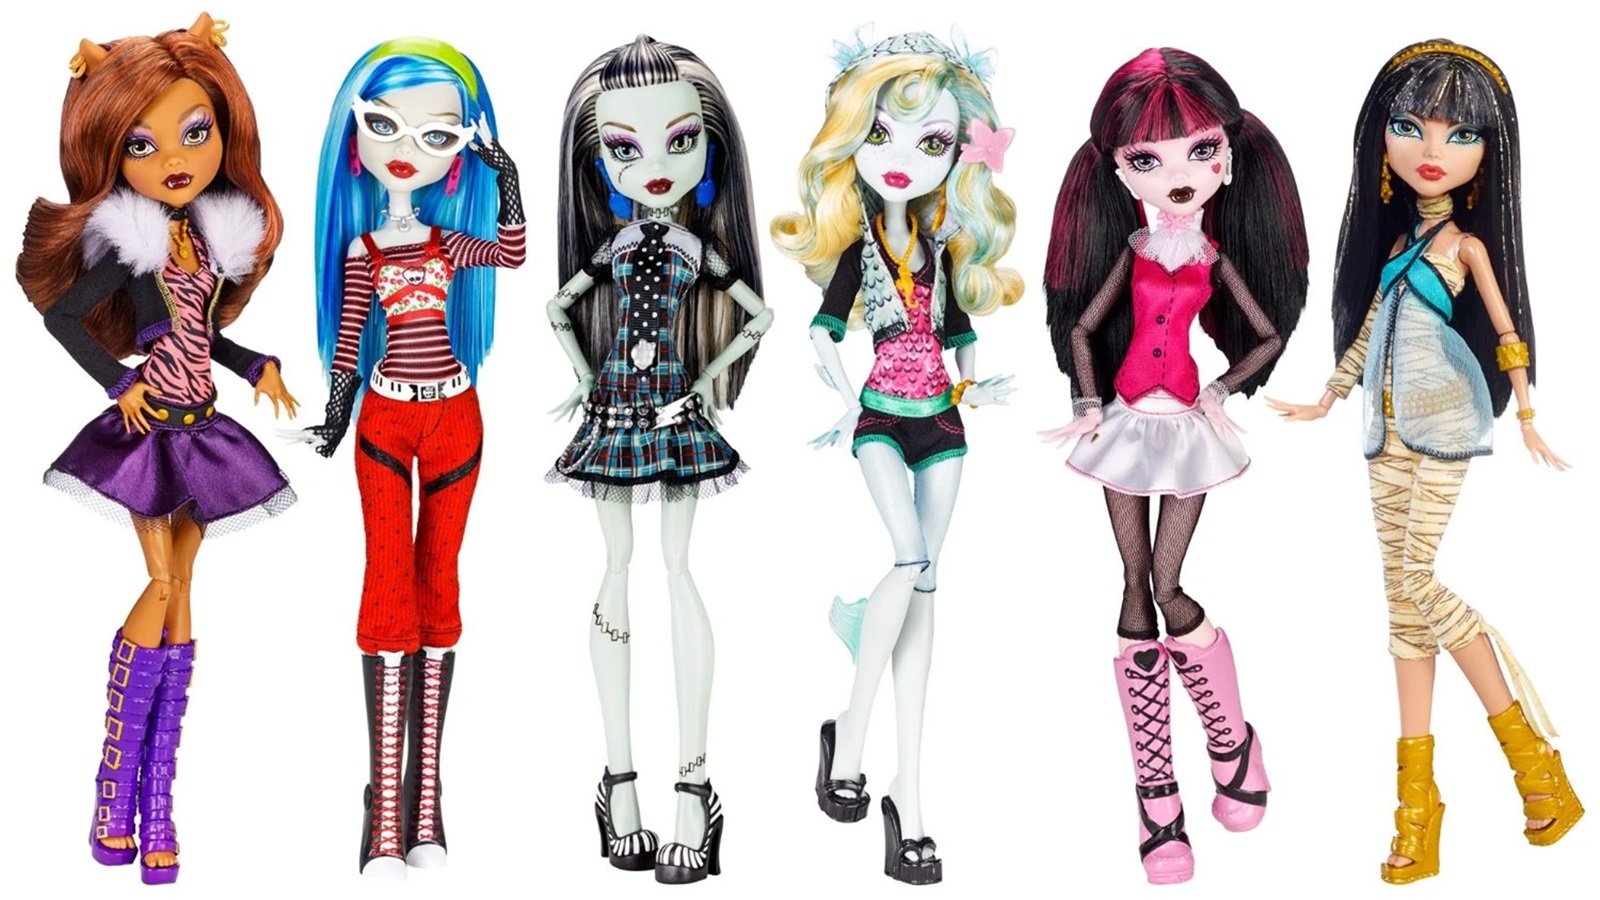 Le bambole di Monster High